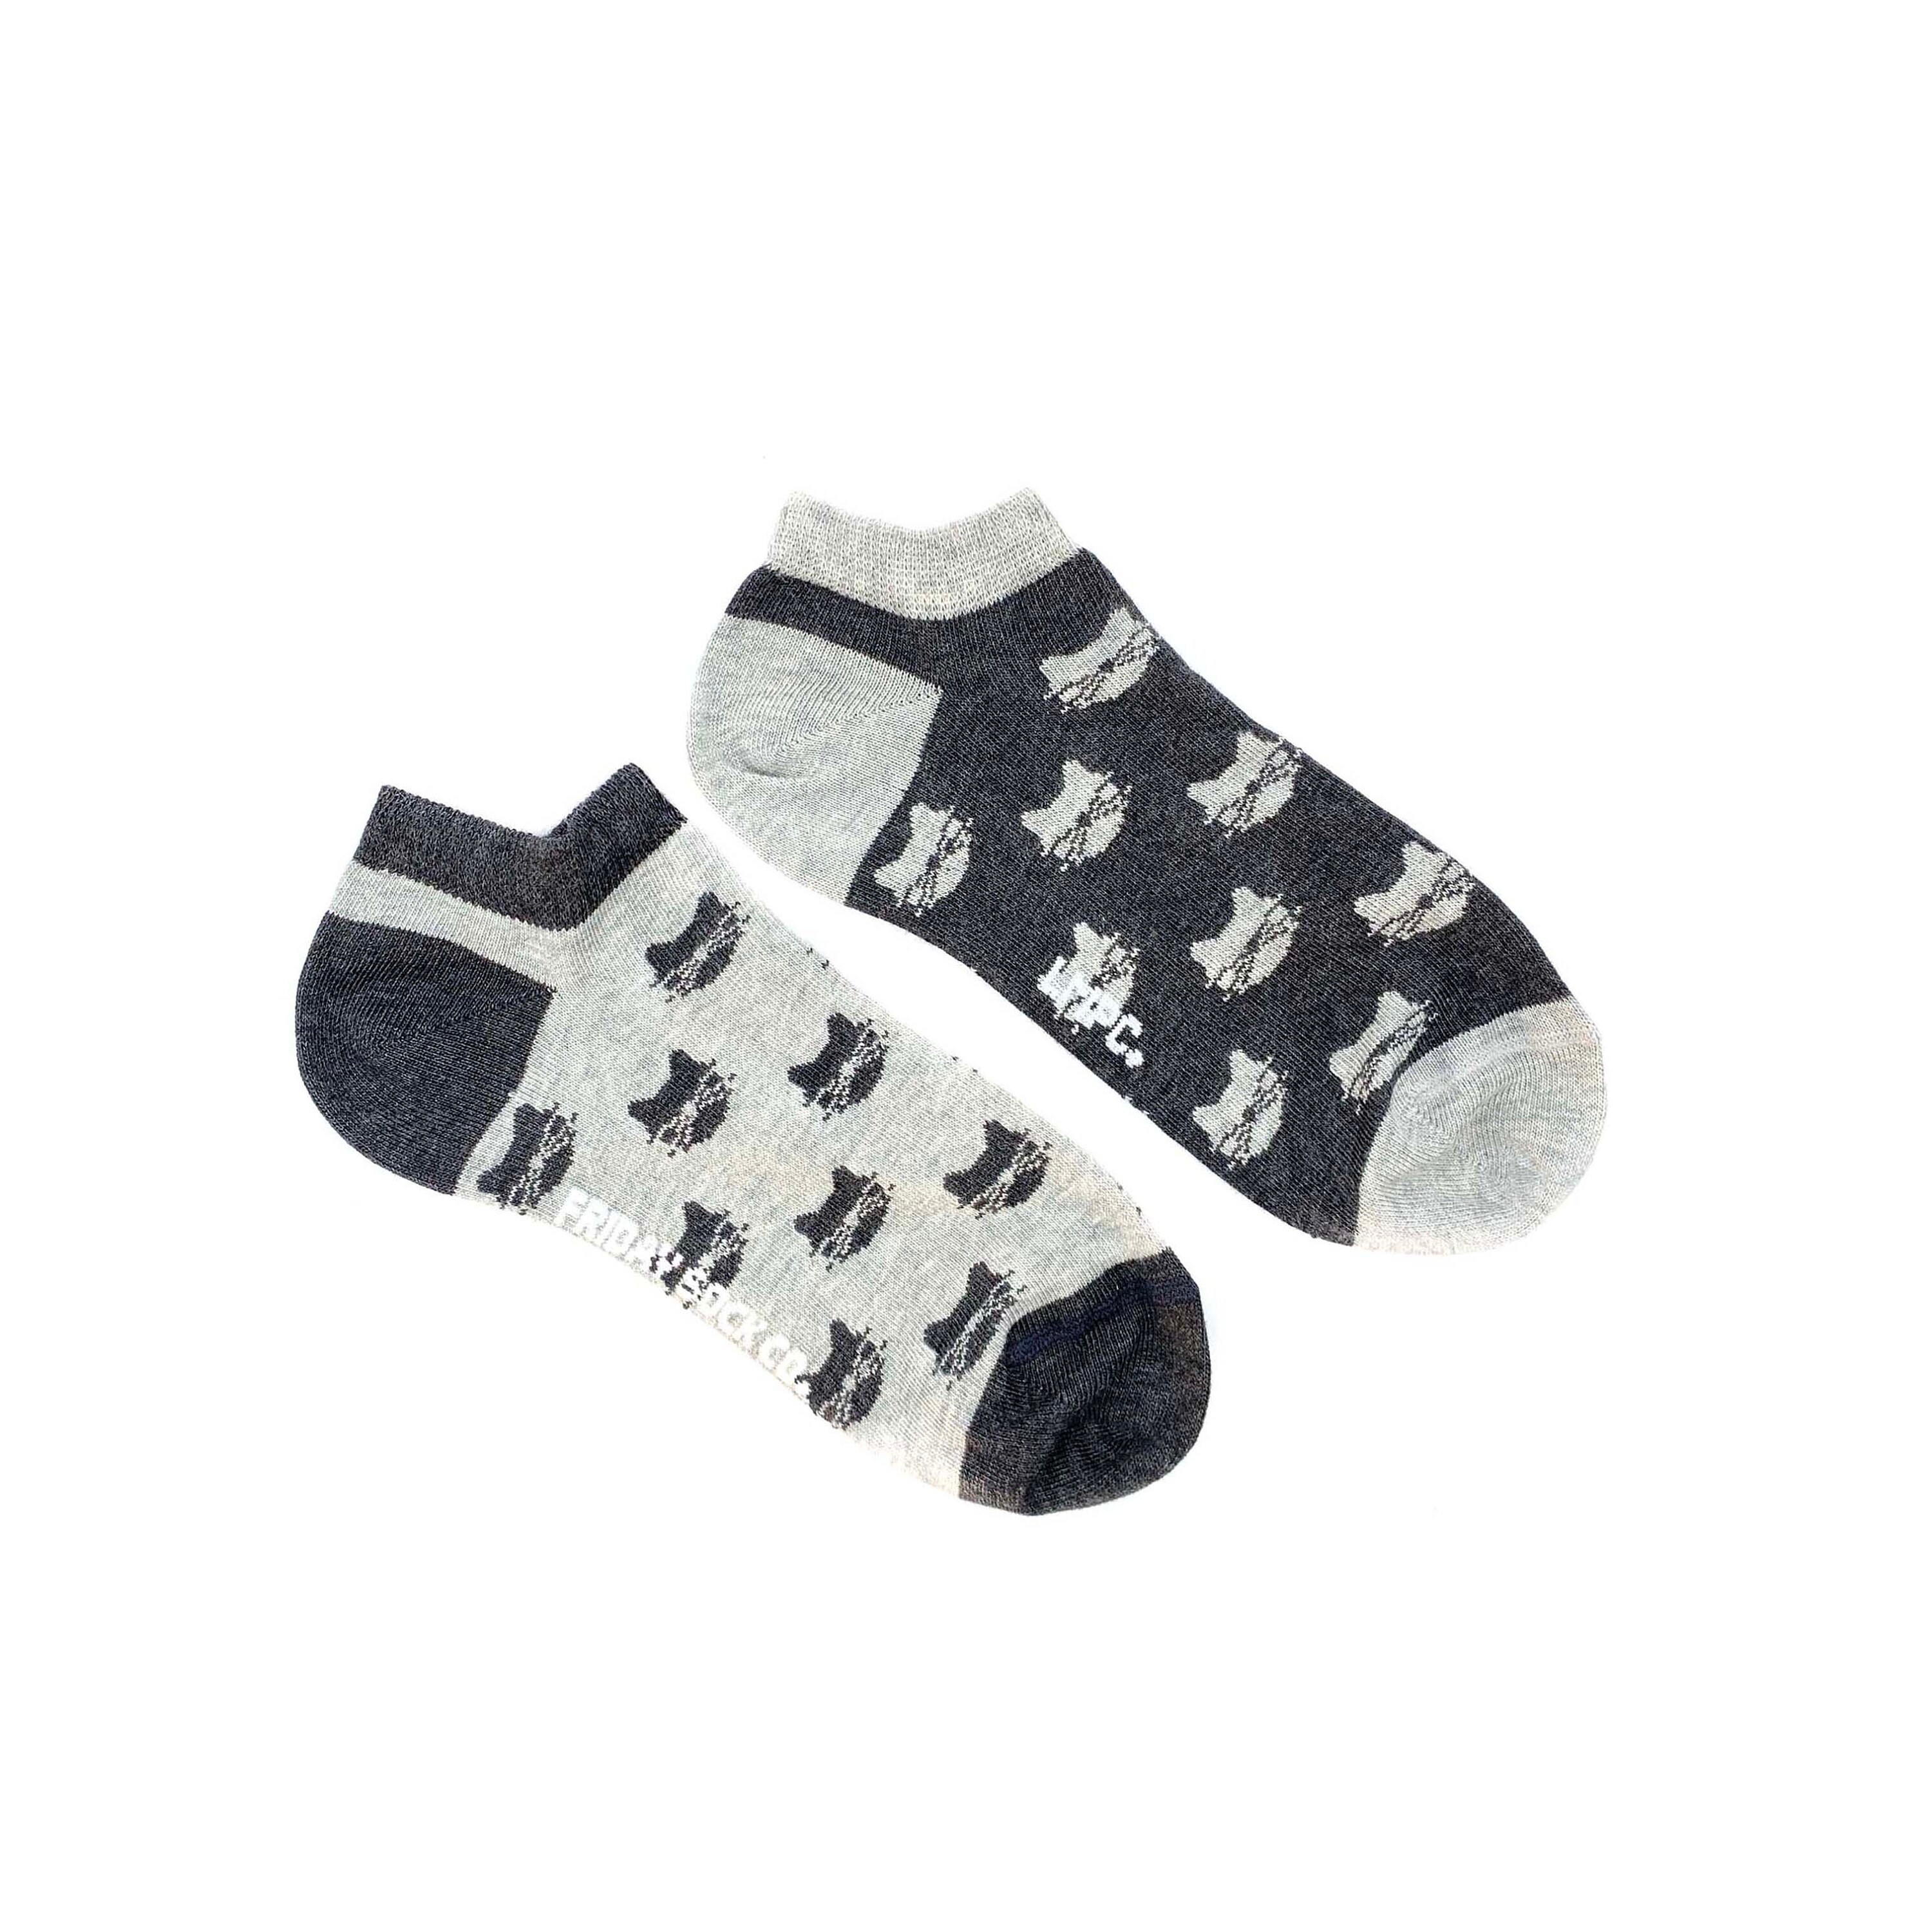 Women's Ankle Socks Grey Cats Mismatched Socks | Etsy